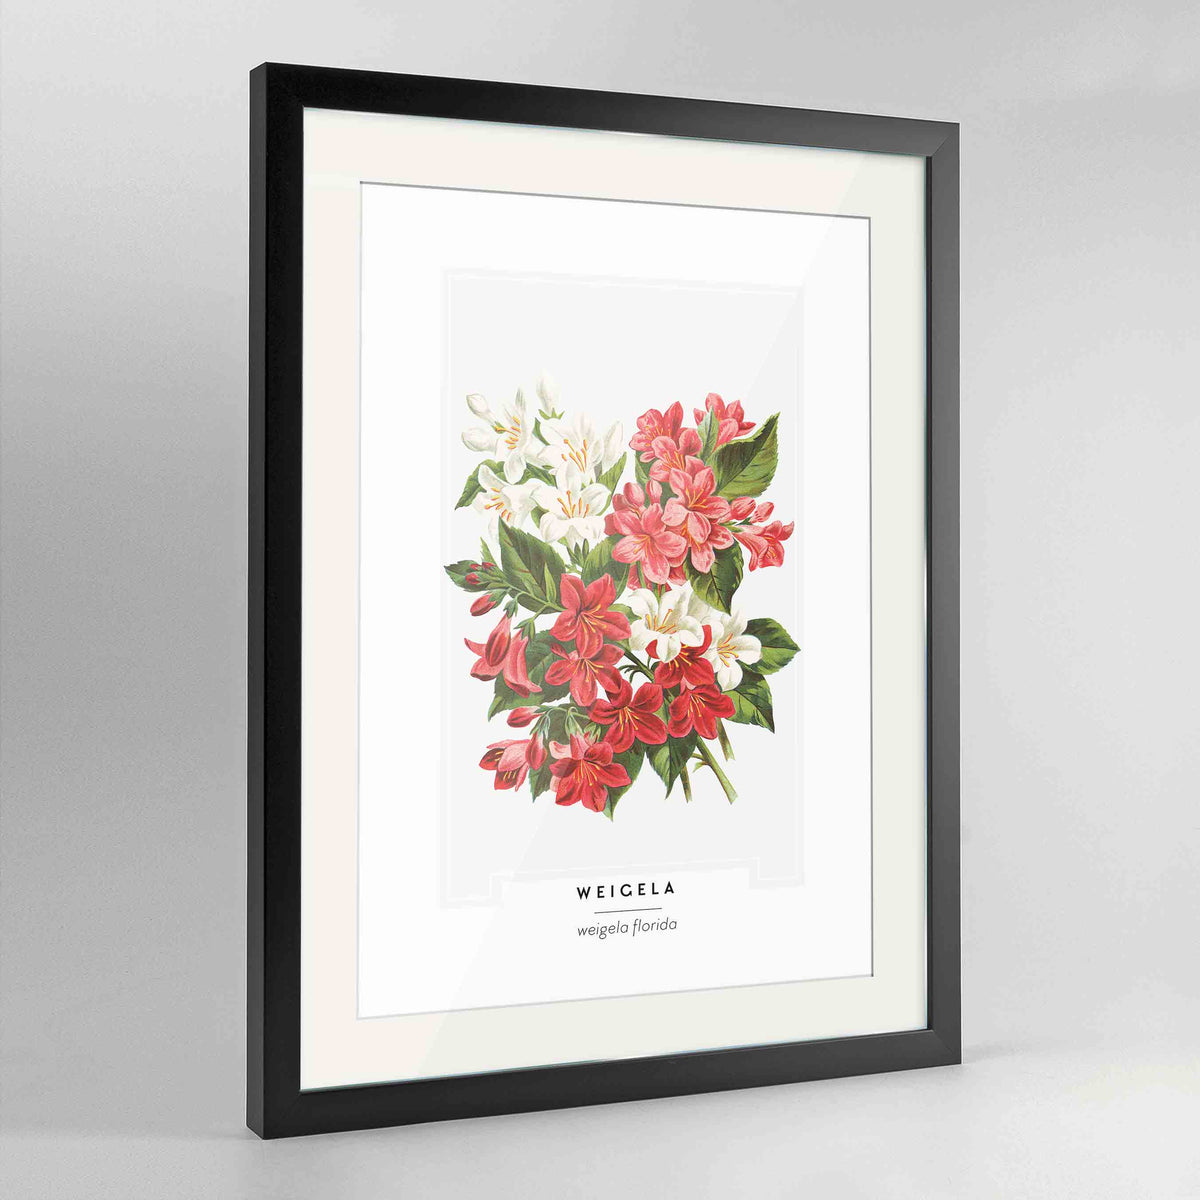 Weigela Botanical Art Print - Framed